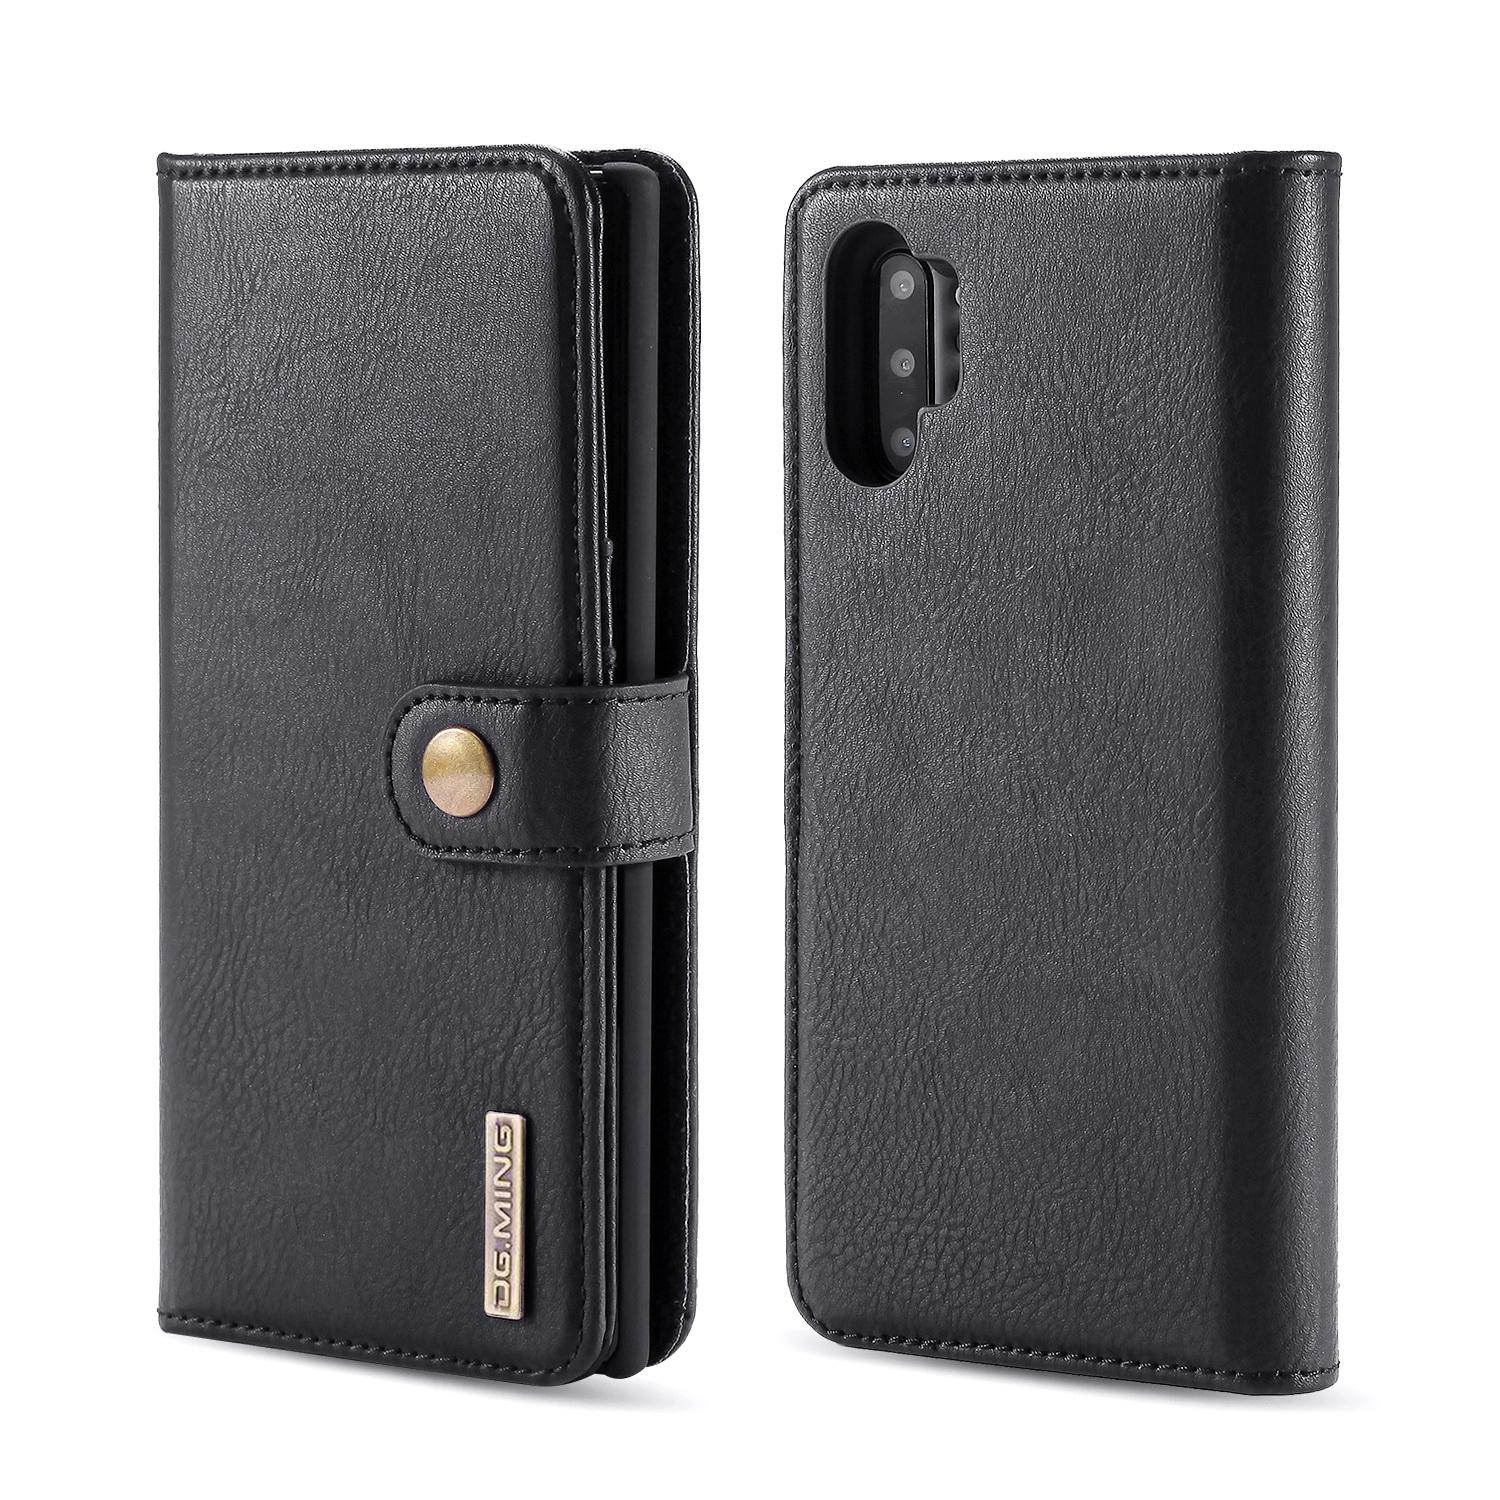 Galaxy Note 10 Plus Plånboksfodral med avtagbart skal, svart